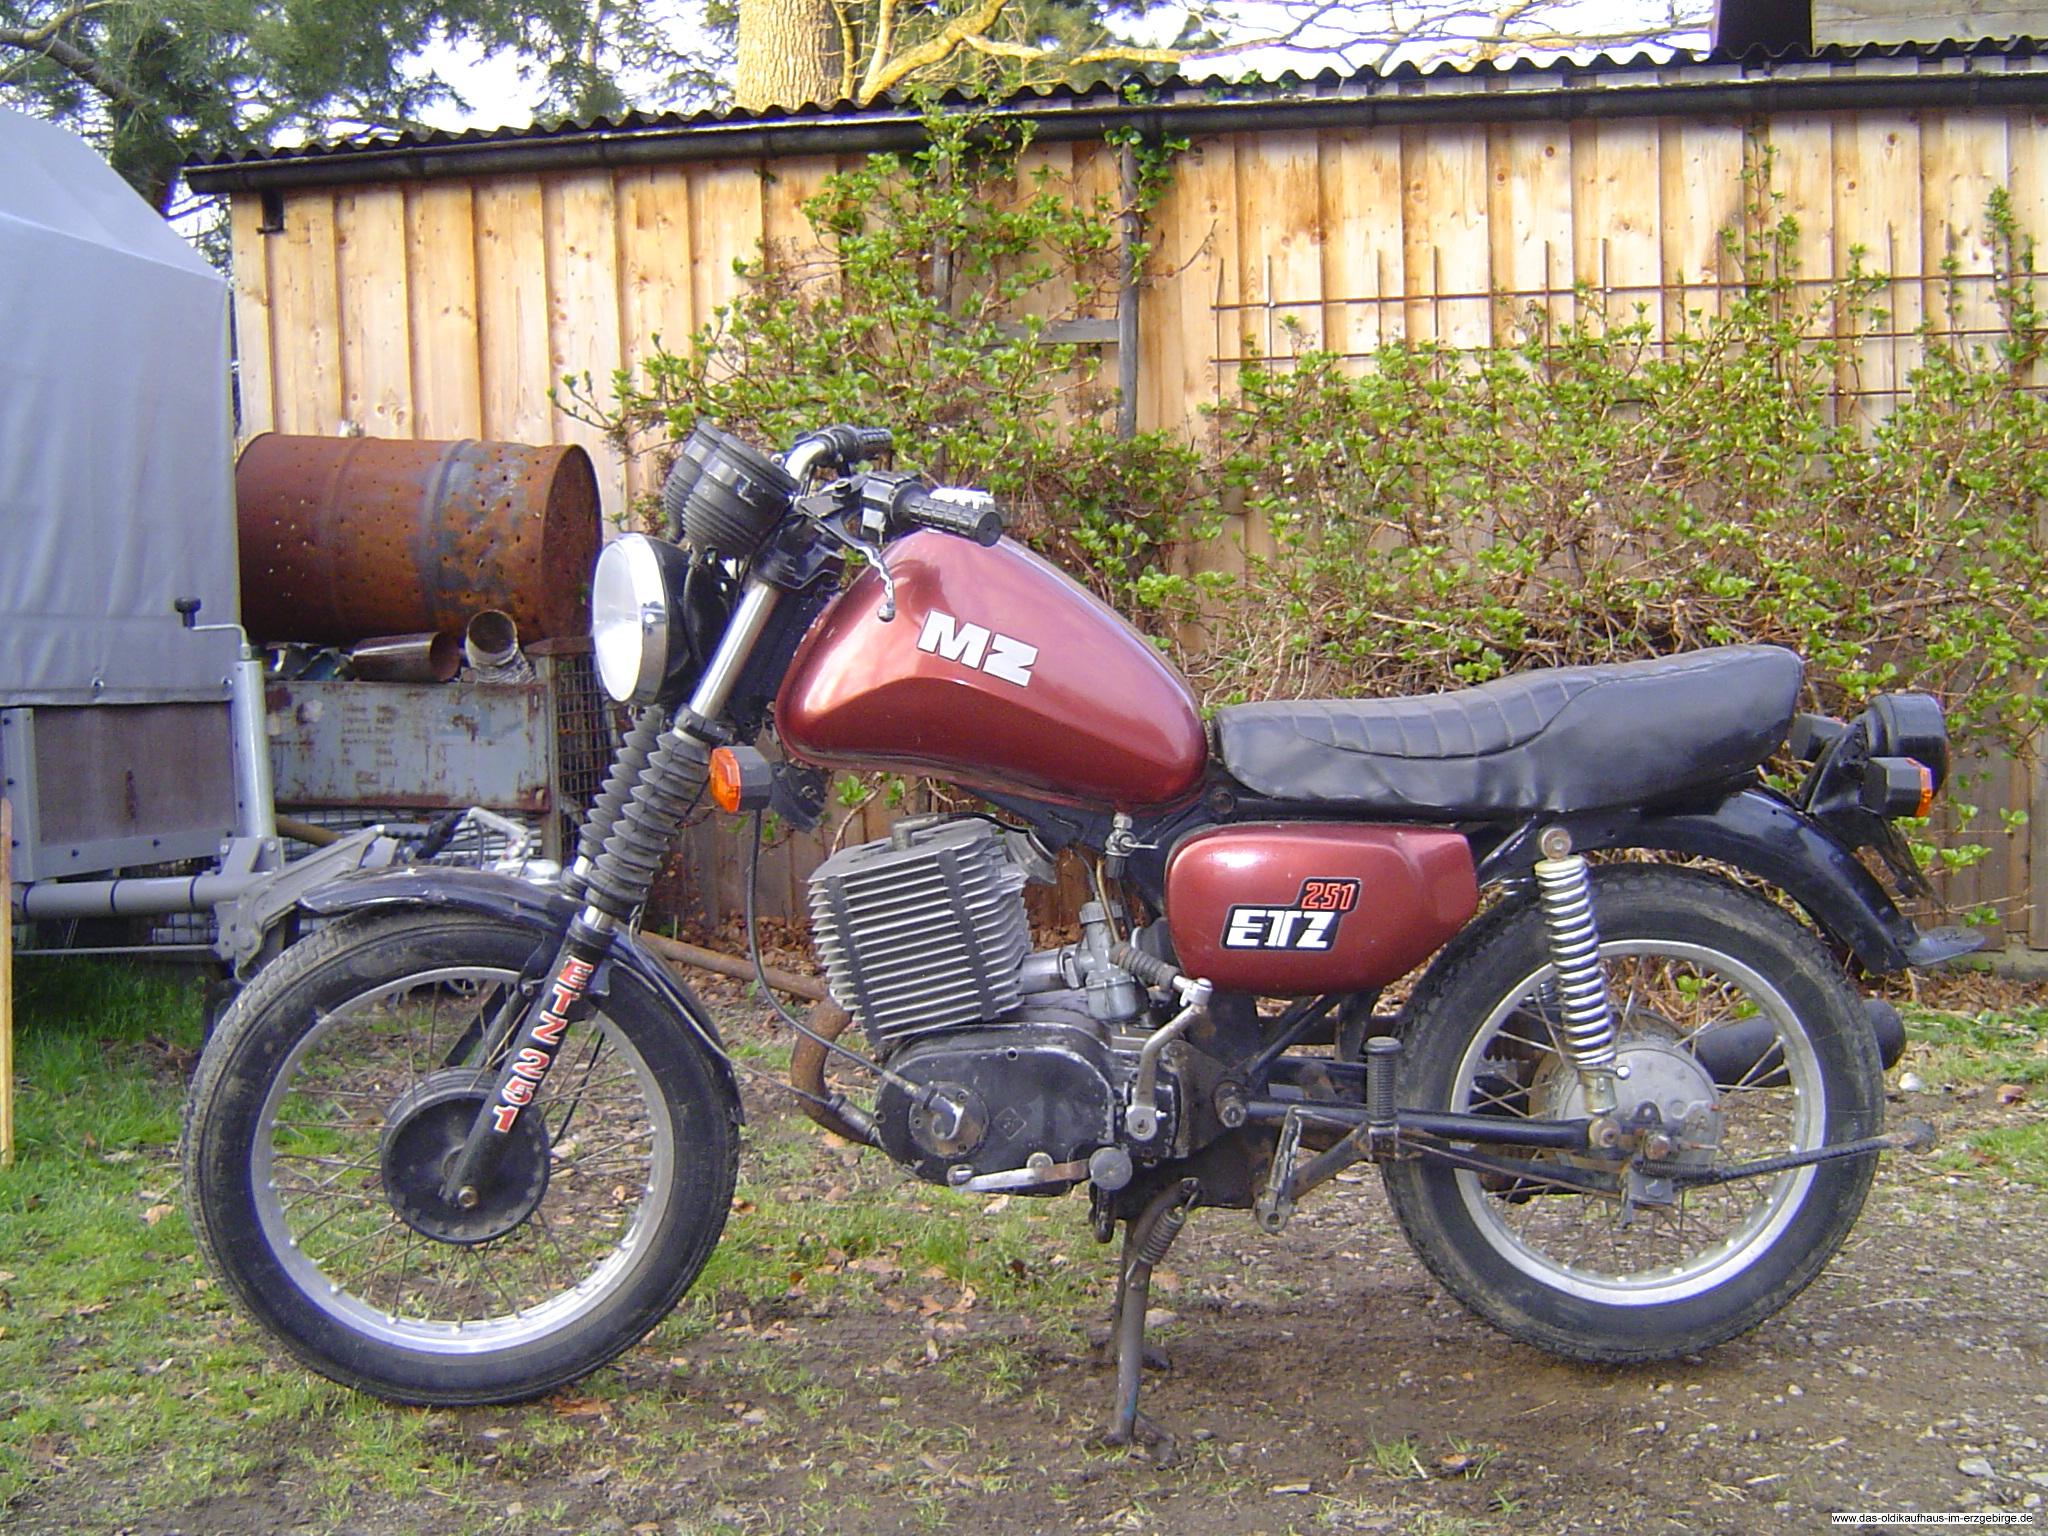 Mz ETZ 251